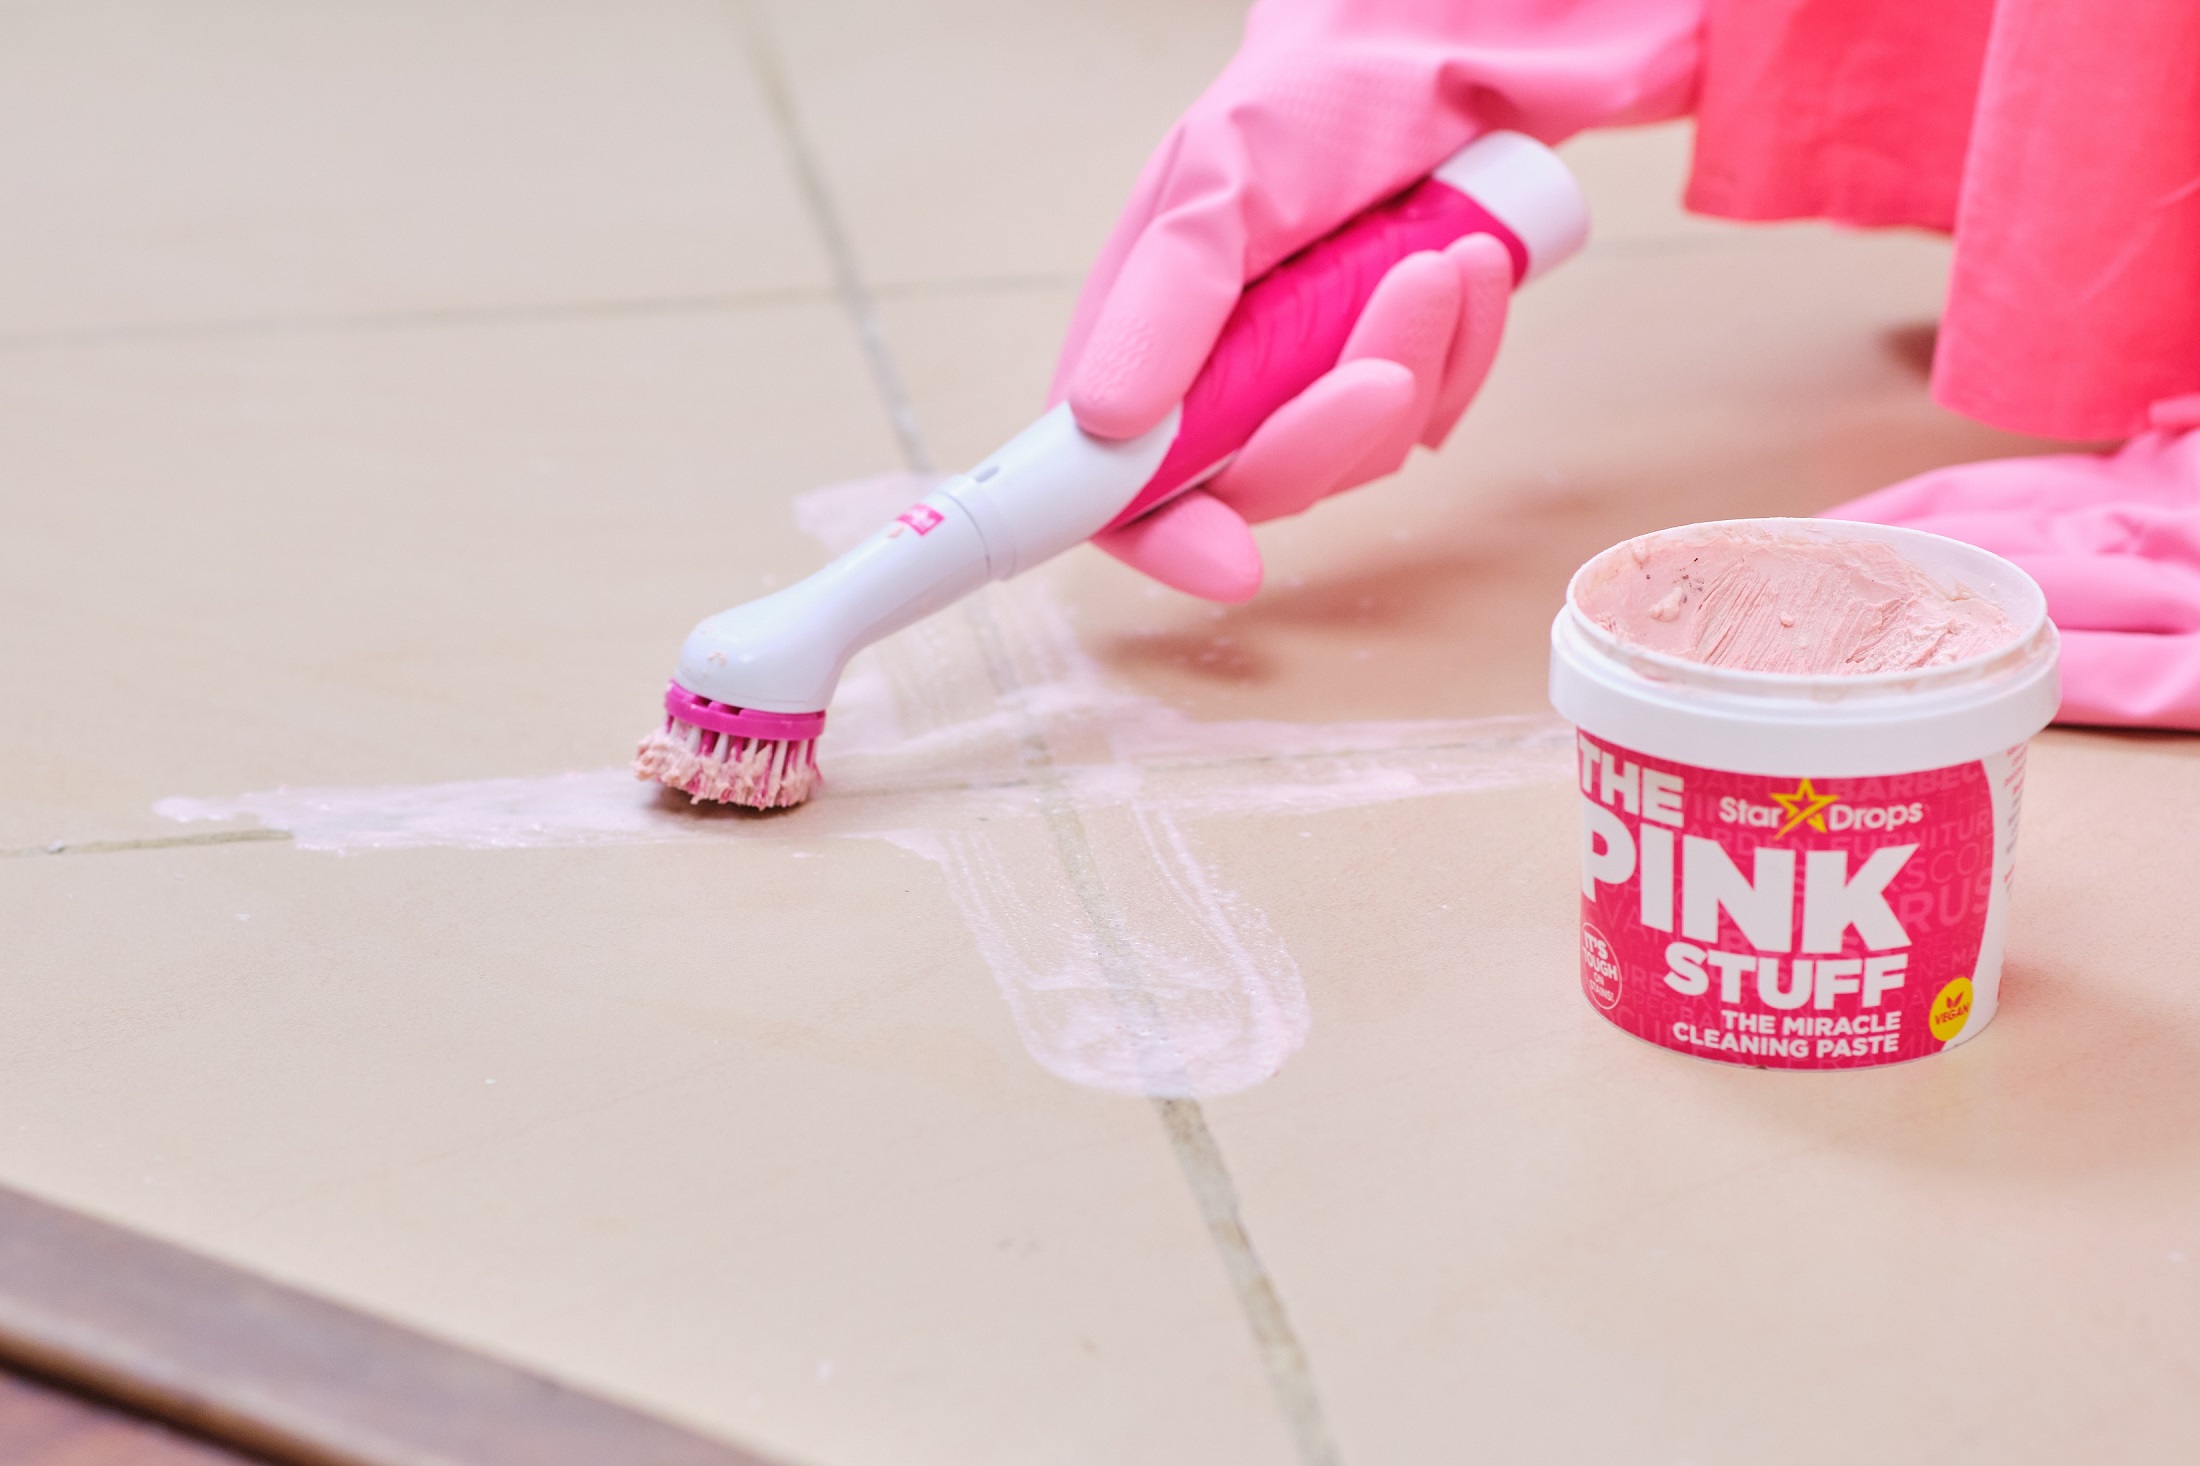 The Pink Stuff - Ultimate Bundle (1 Cleaning Paste, 1 Multi-Purpose Spray, 1 Cream Cleaner, 1 Bathroom Foam Cleaner) - image 4 of 8